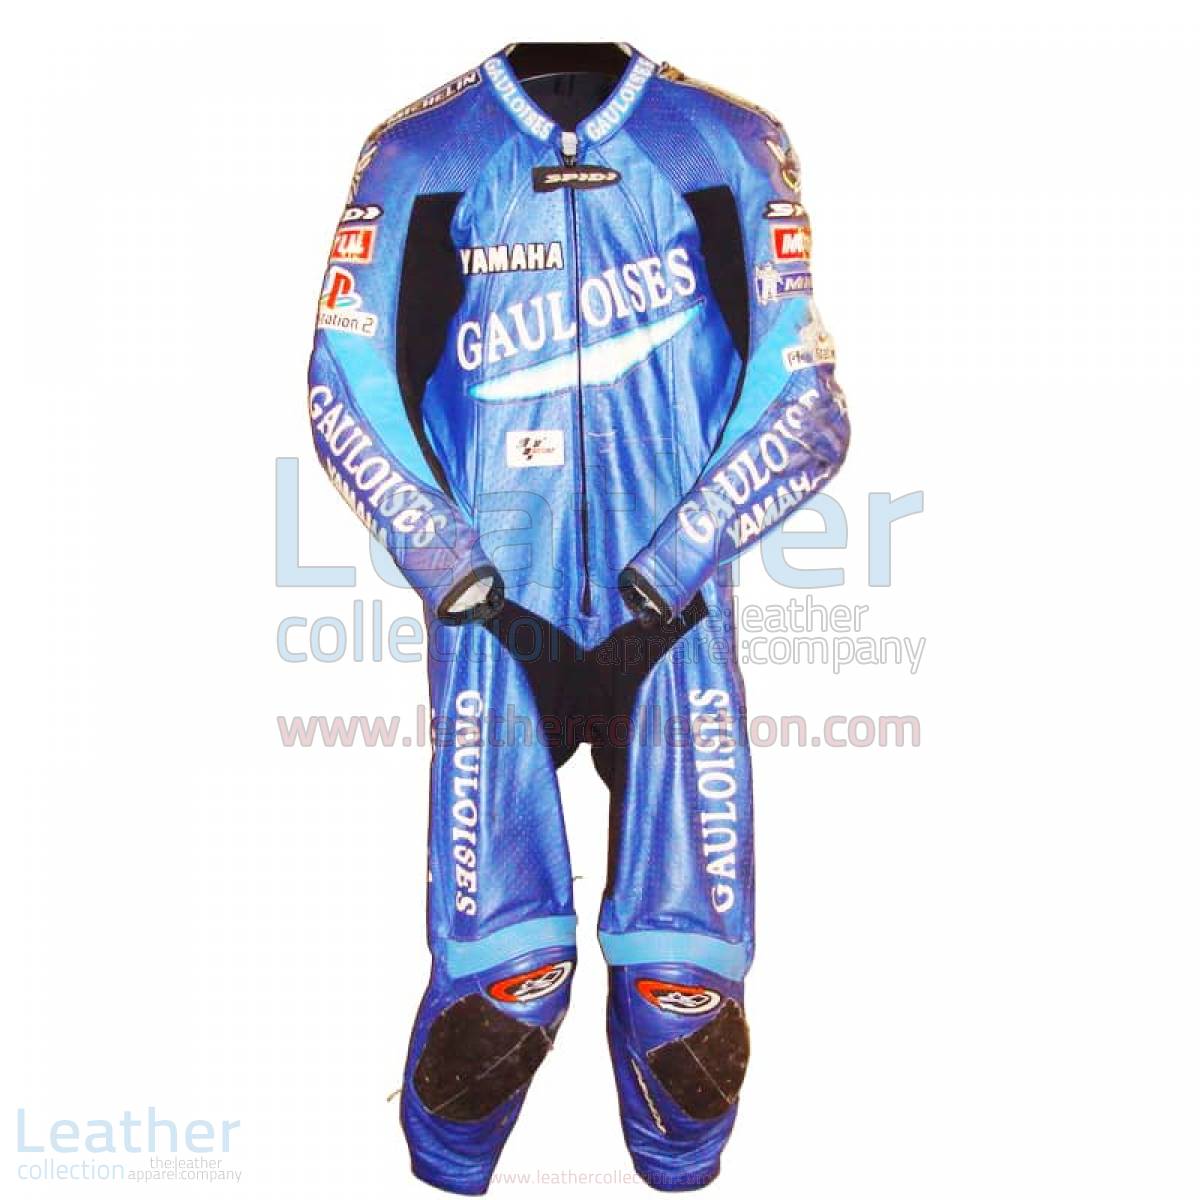 Olivier Jacque Yamaha GP 2003 racing suit